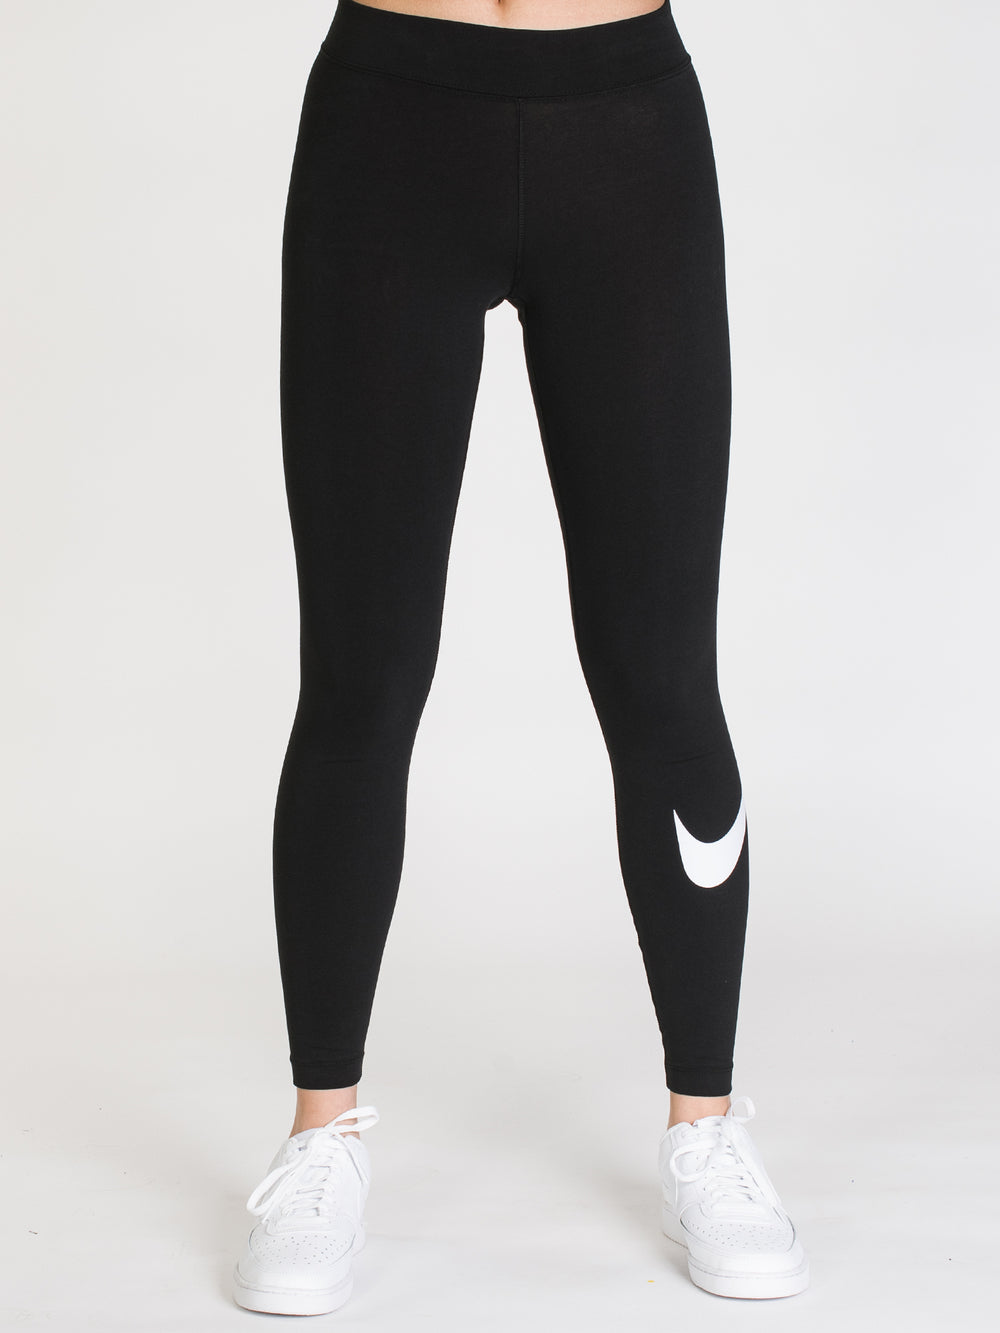 Nike Womens Running Leggings 3/4 Sportswear Gym Bottom Activewear Black S M  L XL